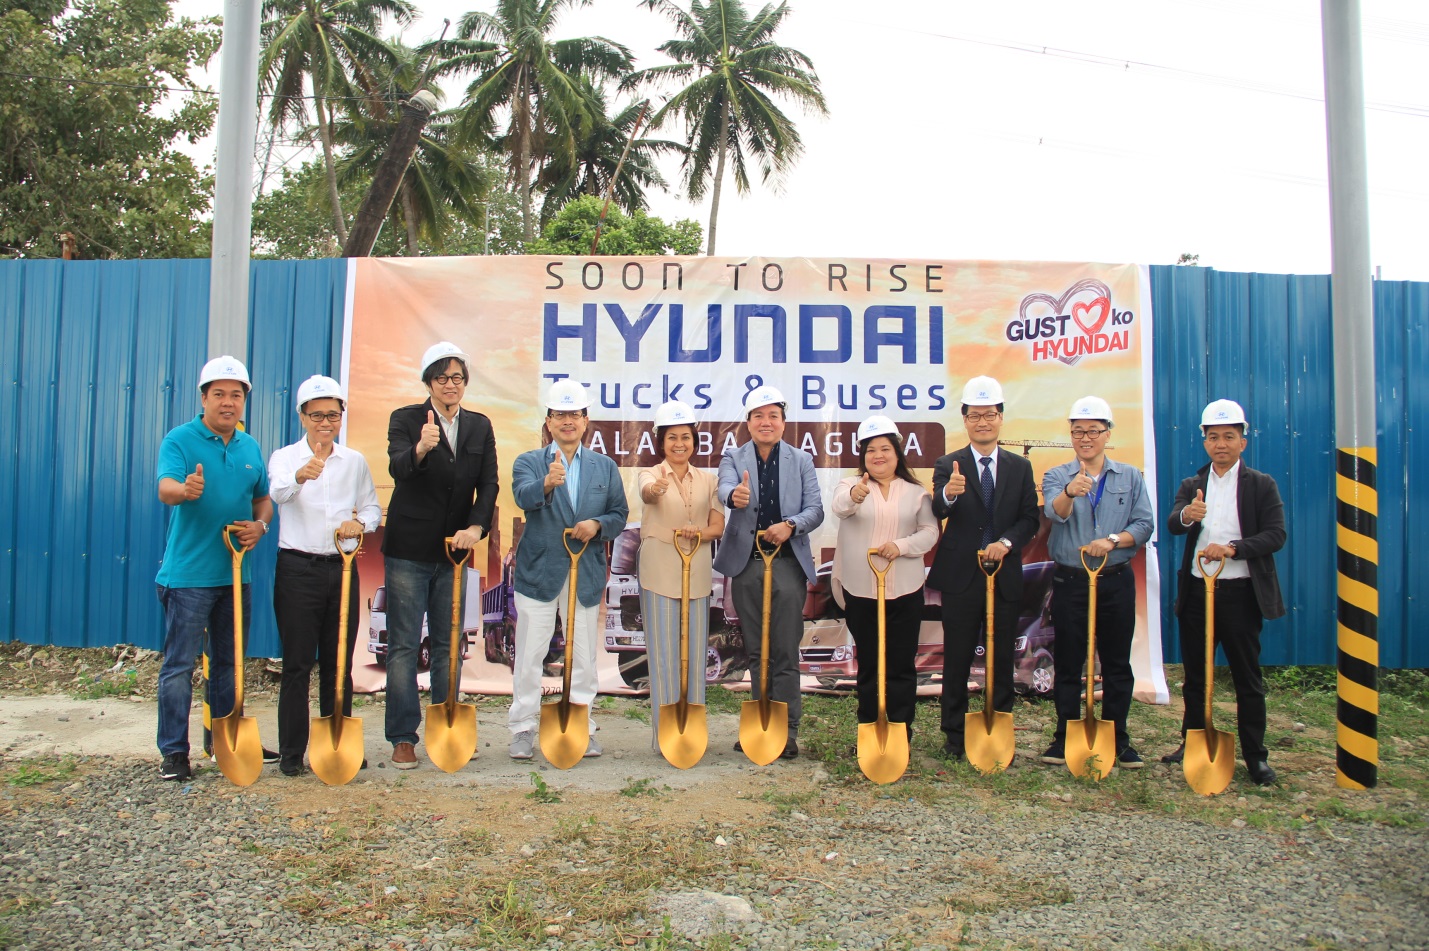 Hyundai Breaks Ground of New Commercial Vehicle Dealership in Laguna